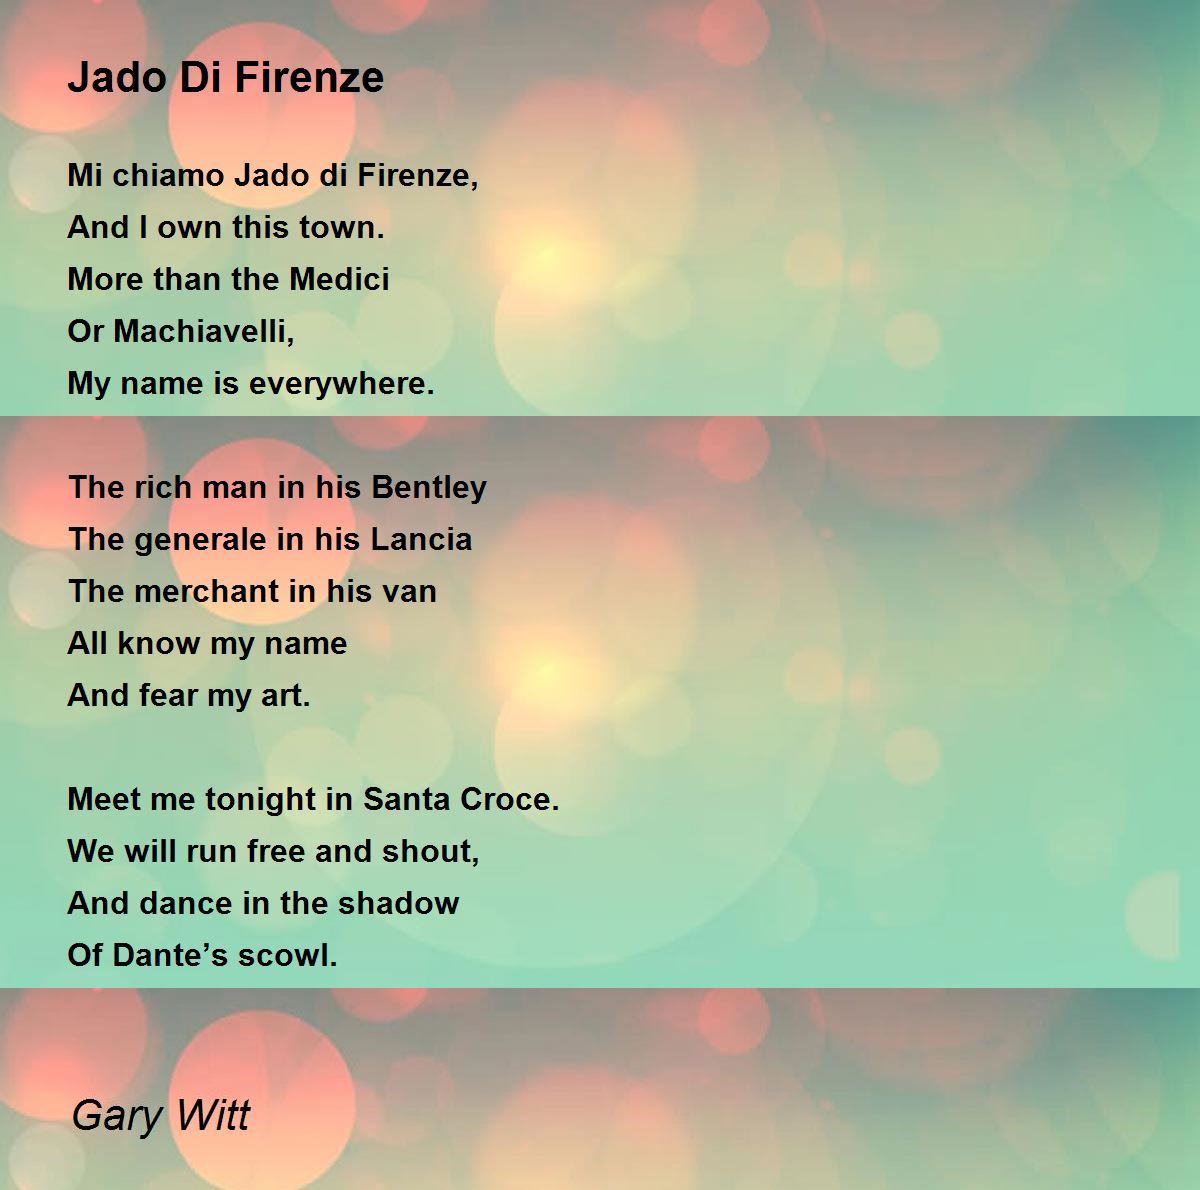 Jado Di Firenze - Jado Di Firenze Poem by Gary Witt